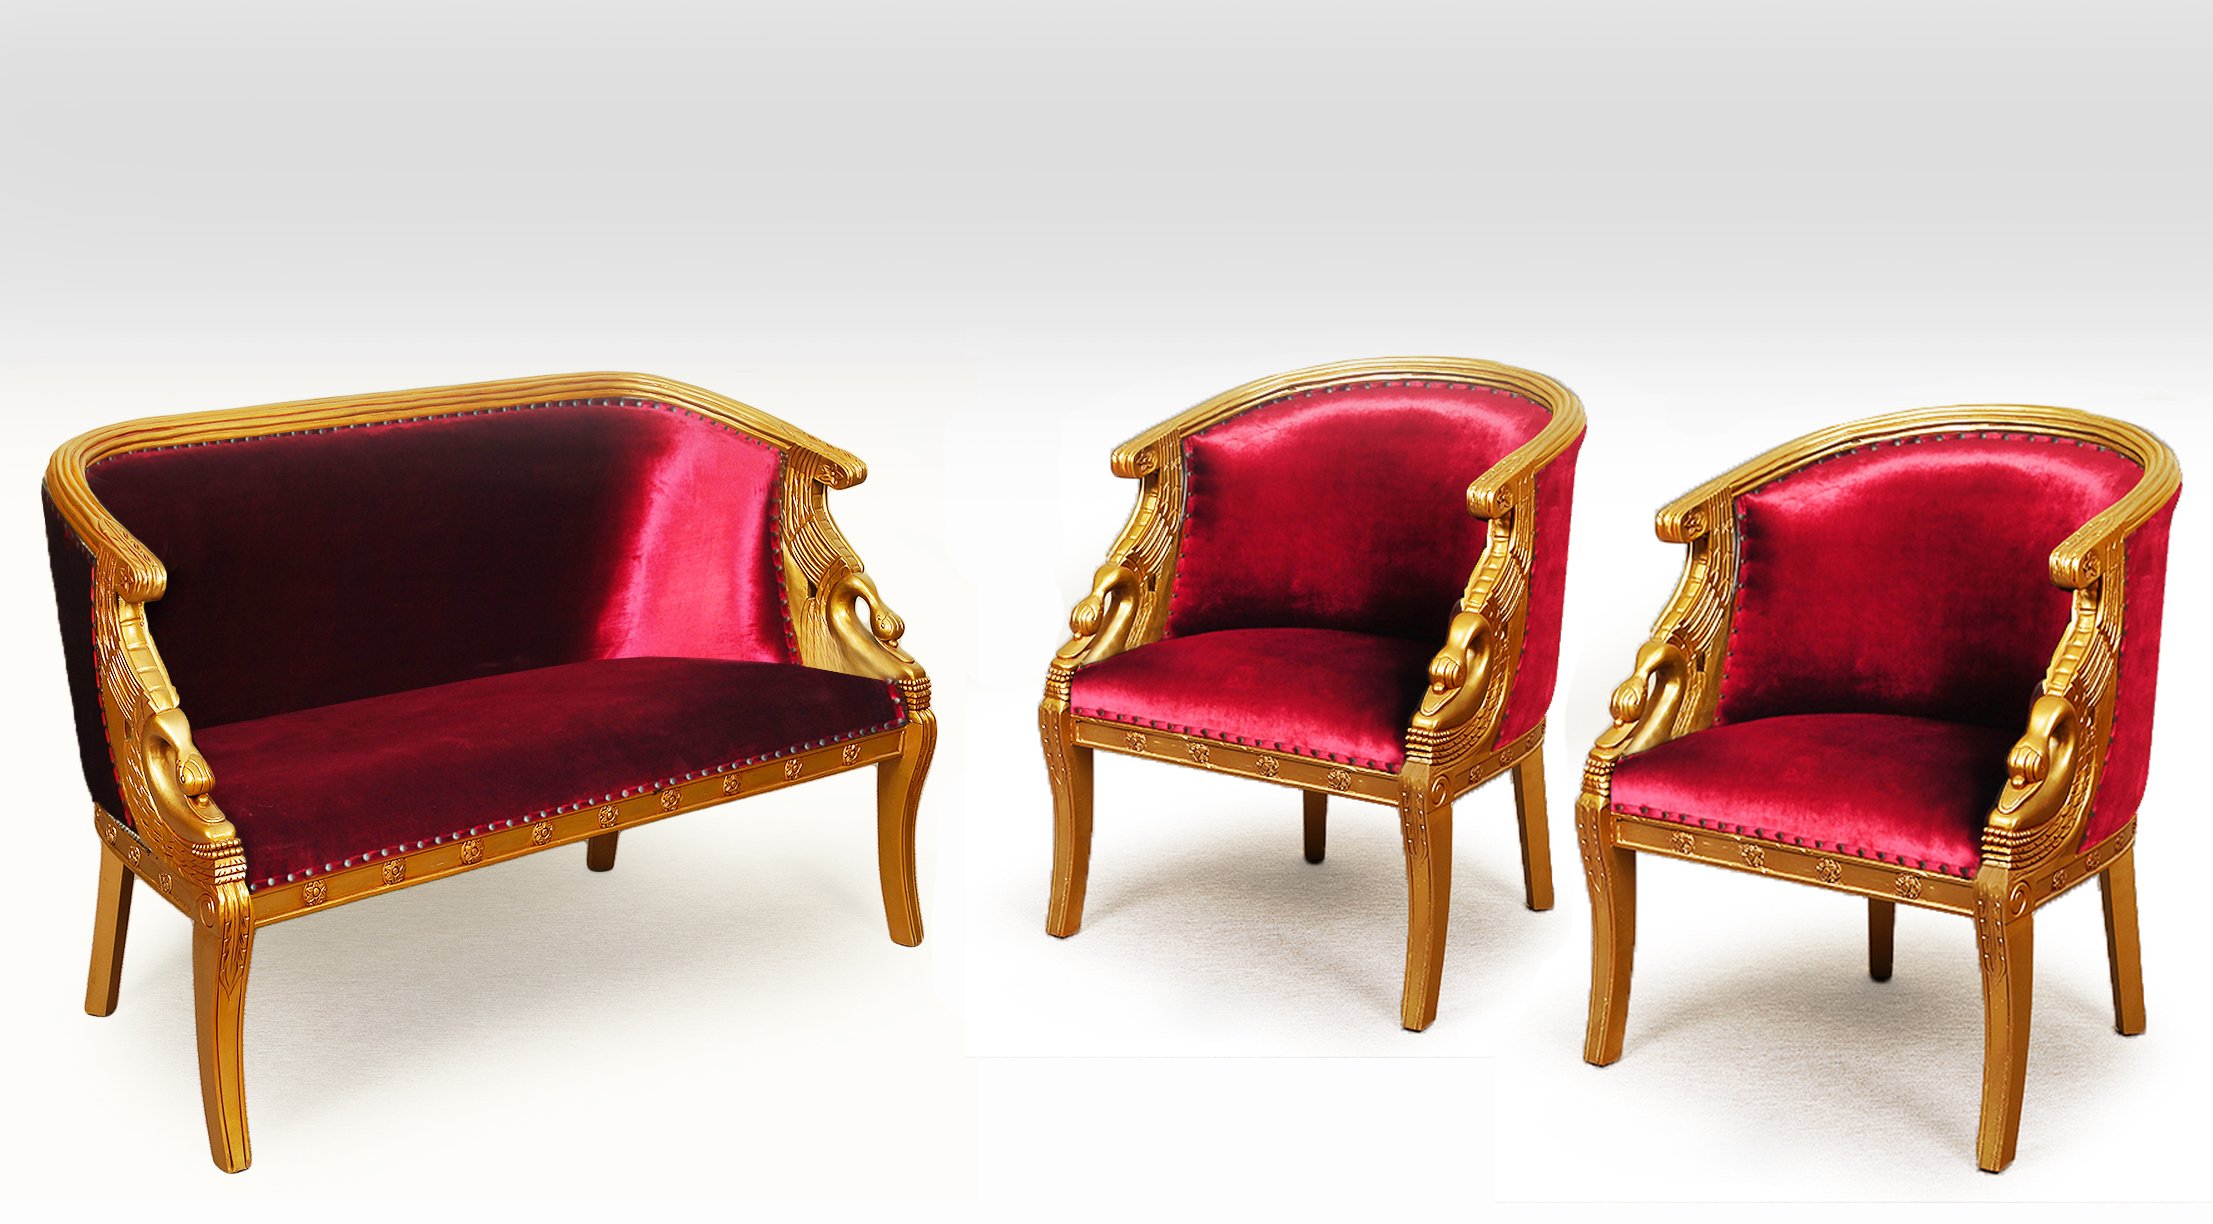 Two armchairs. Стул Византия zzimbo.